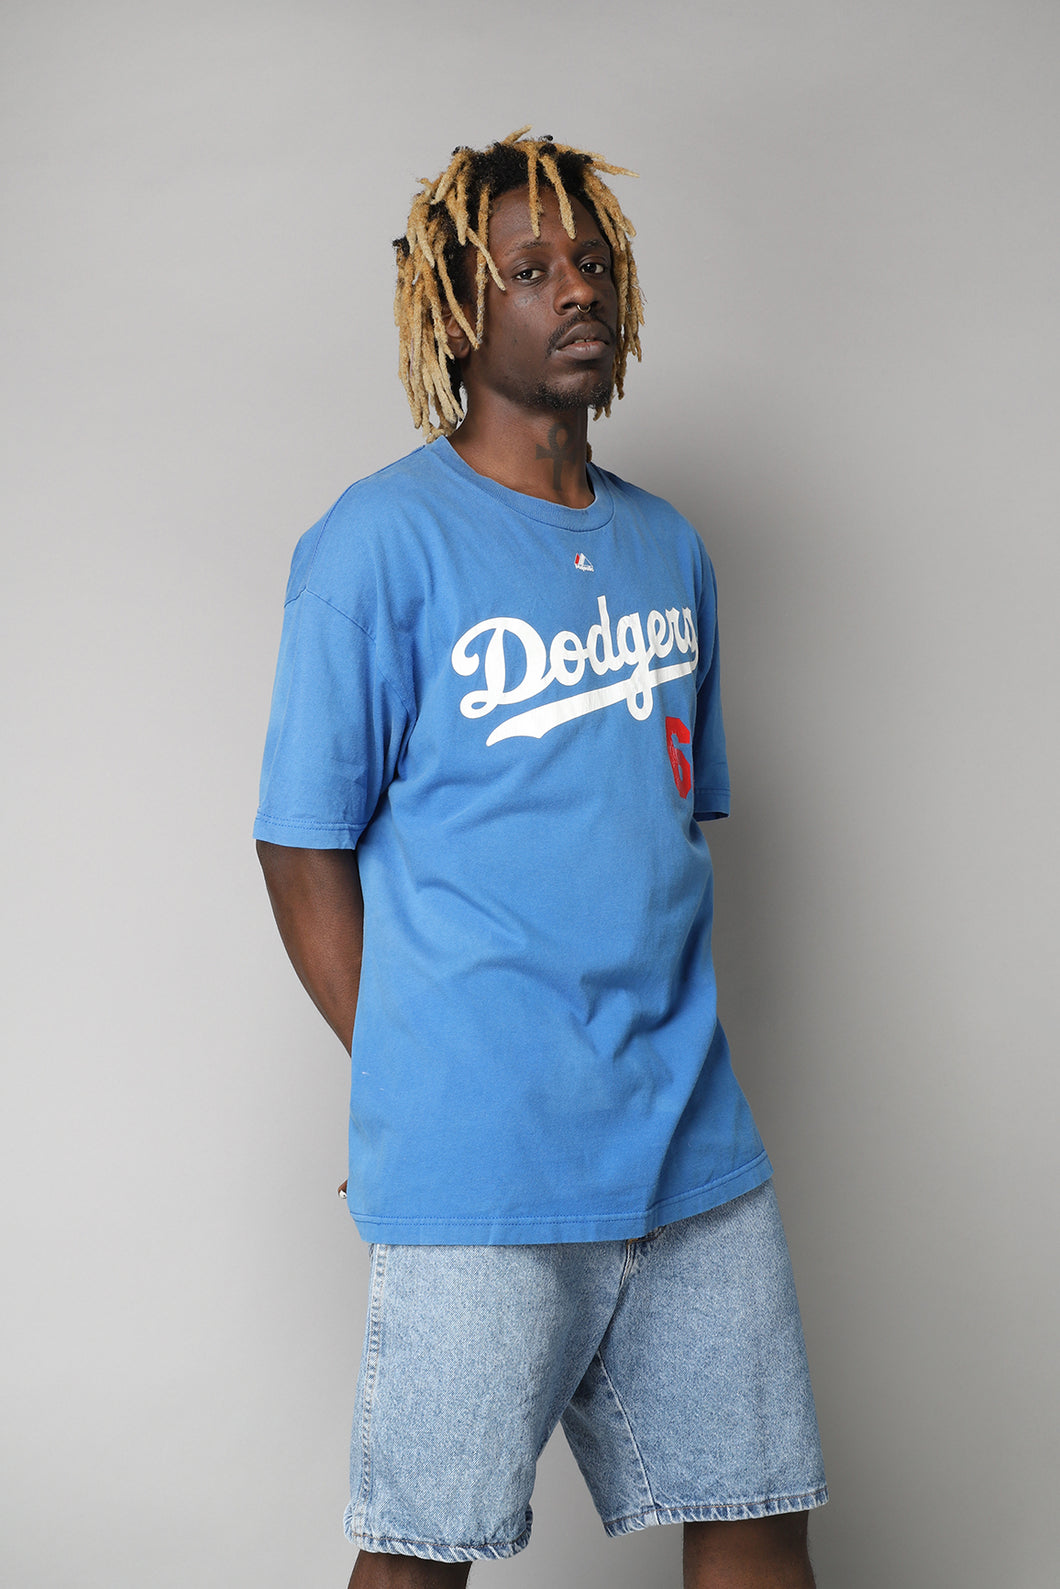 Dodgers Baseball Faded Blue T-shirt